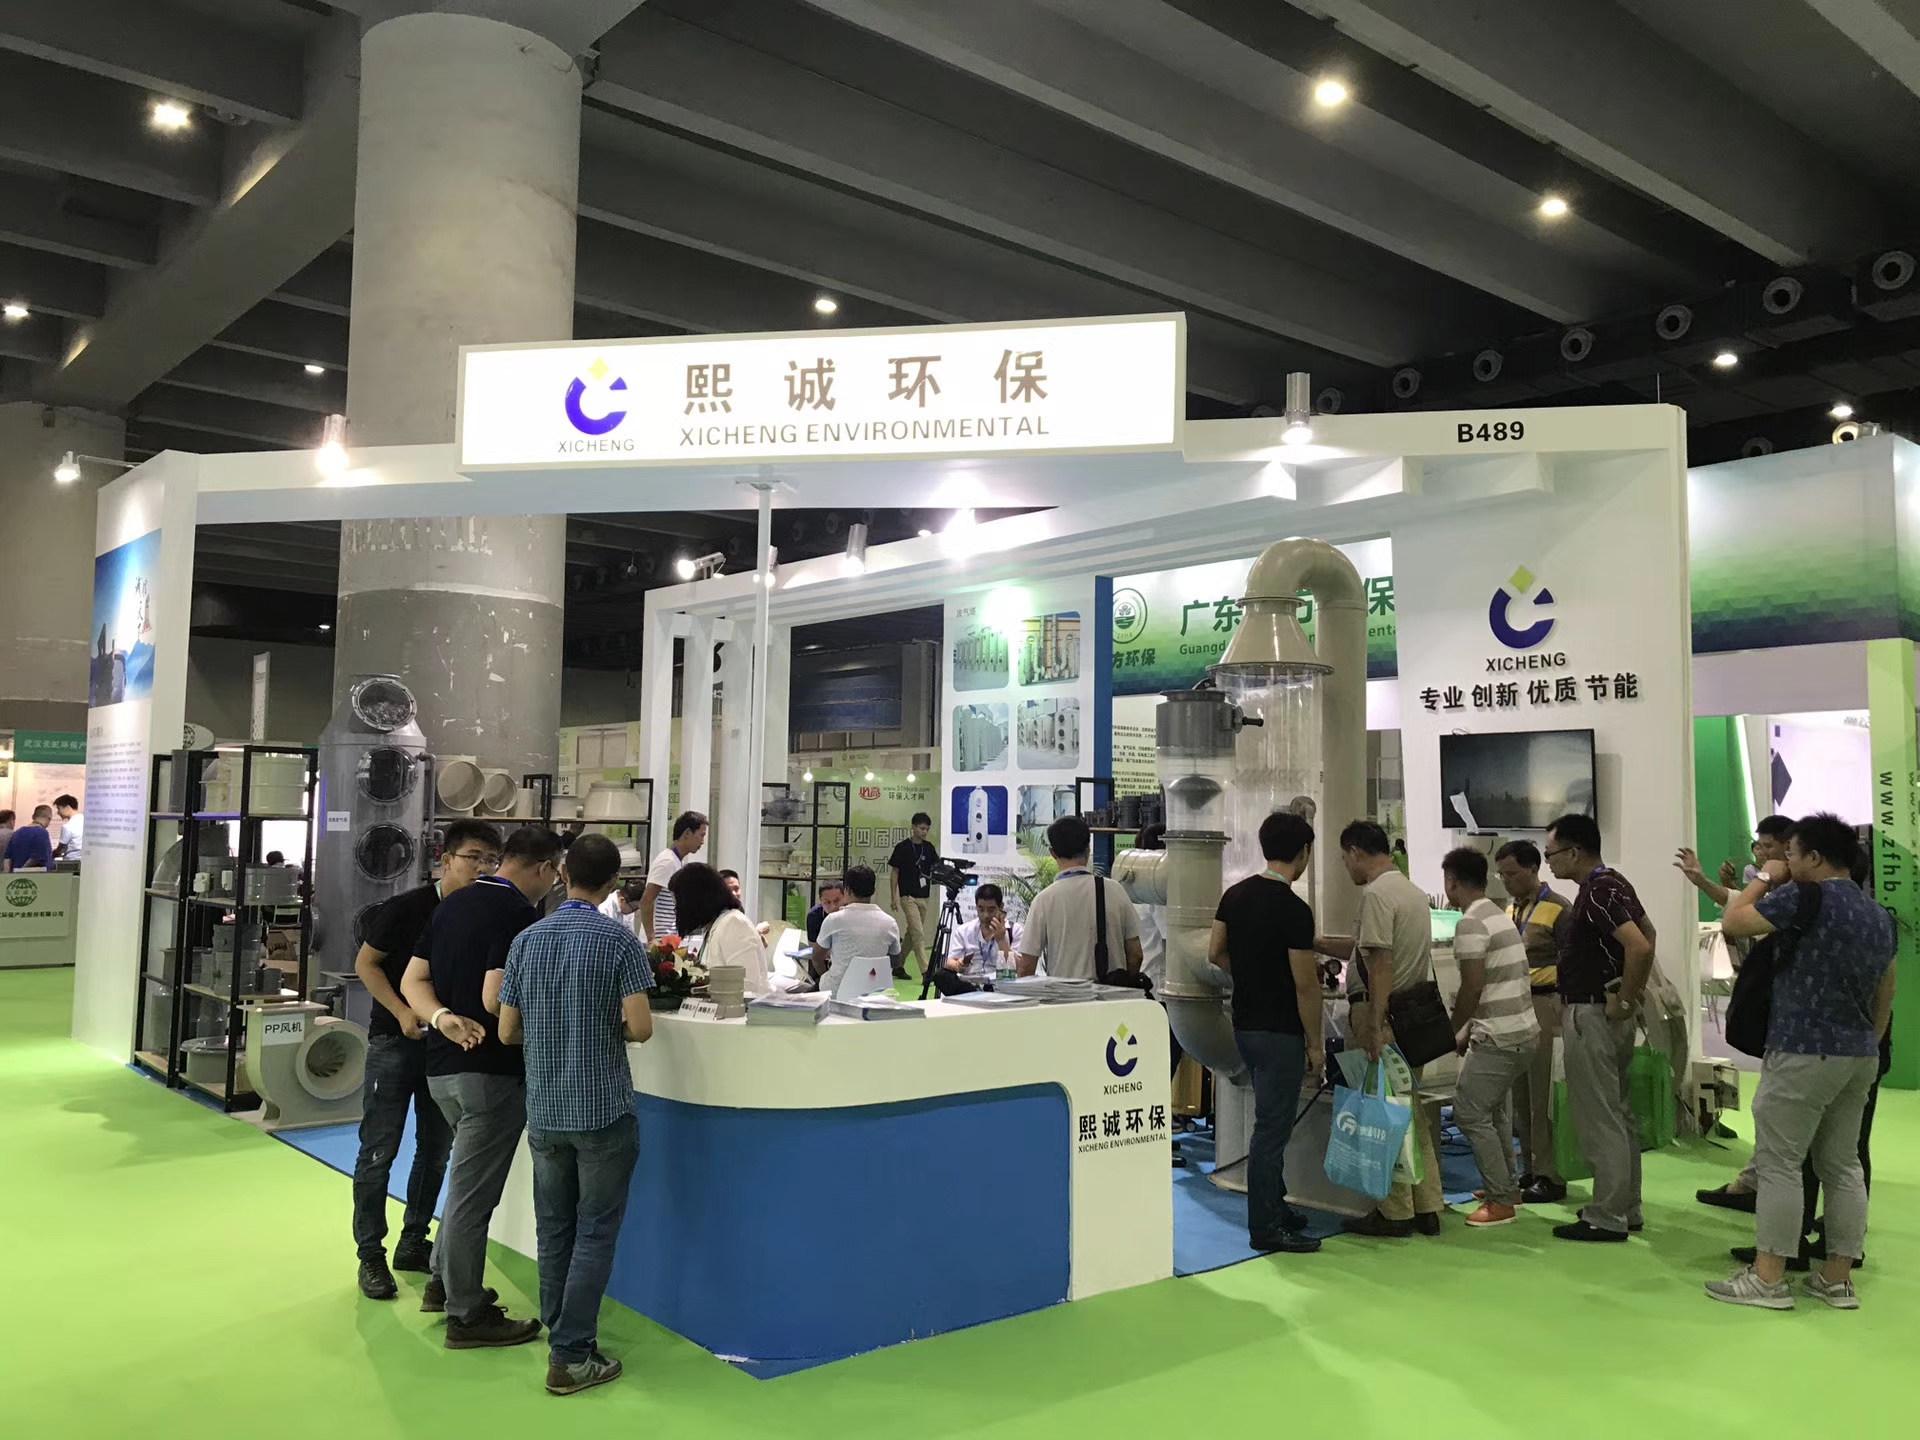 Shenzhen Ventilation Device Industrial corrosion resistant pipe list square ventilation pipe